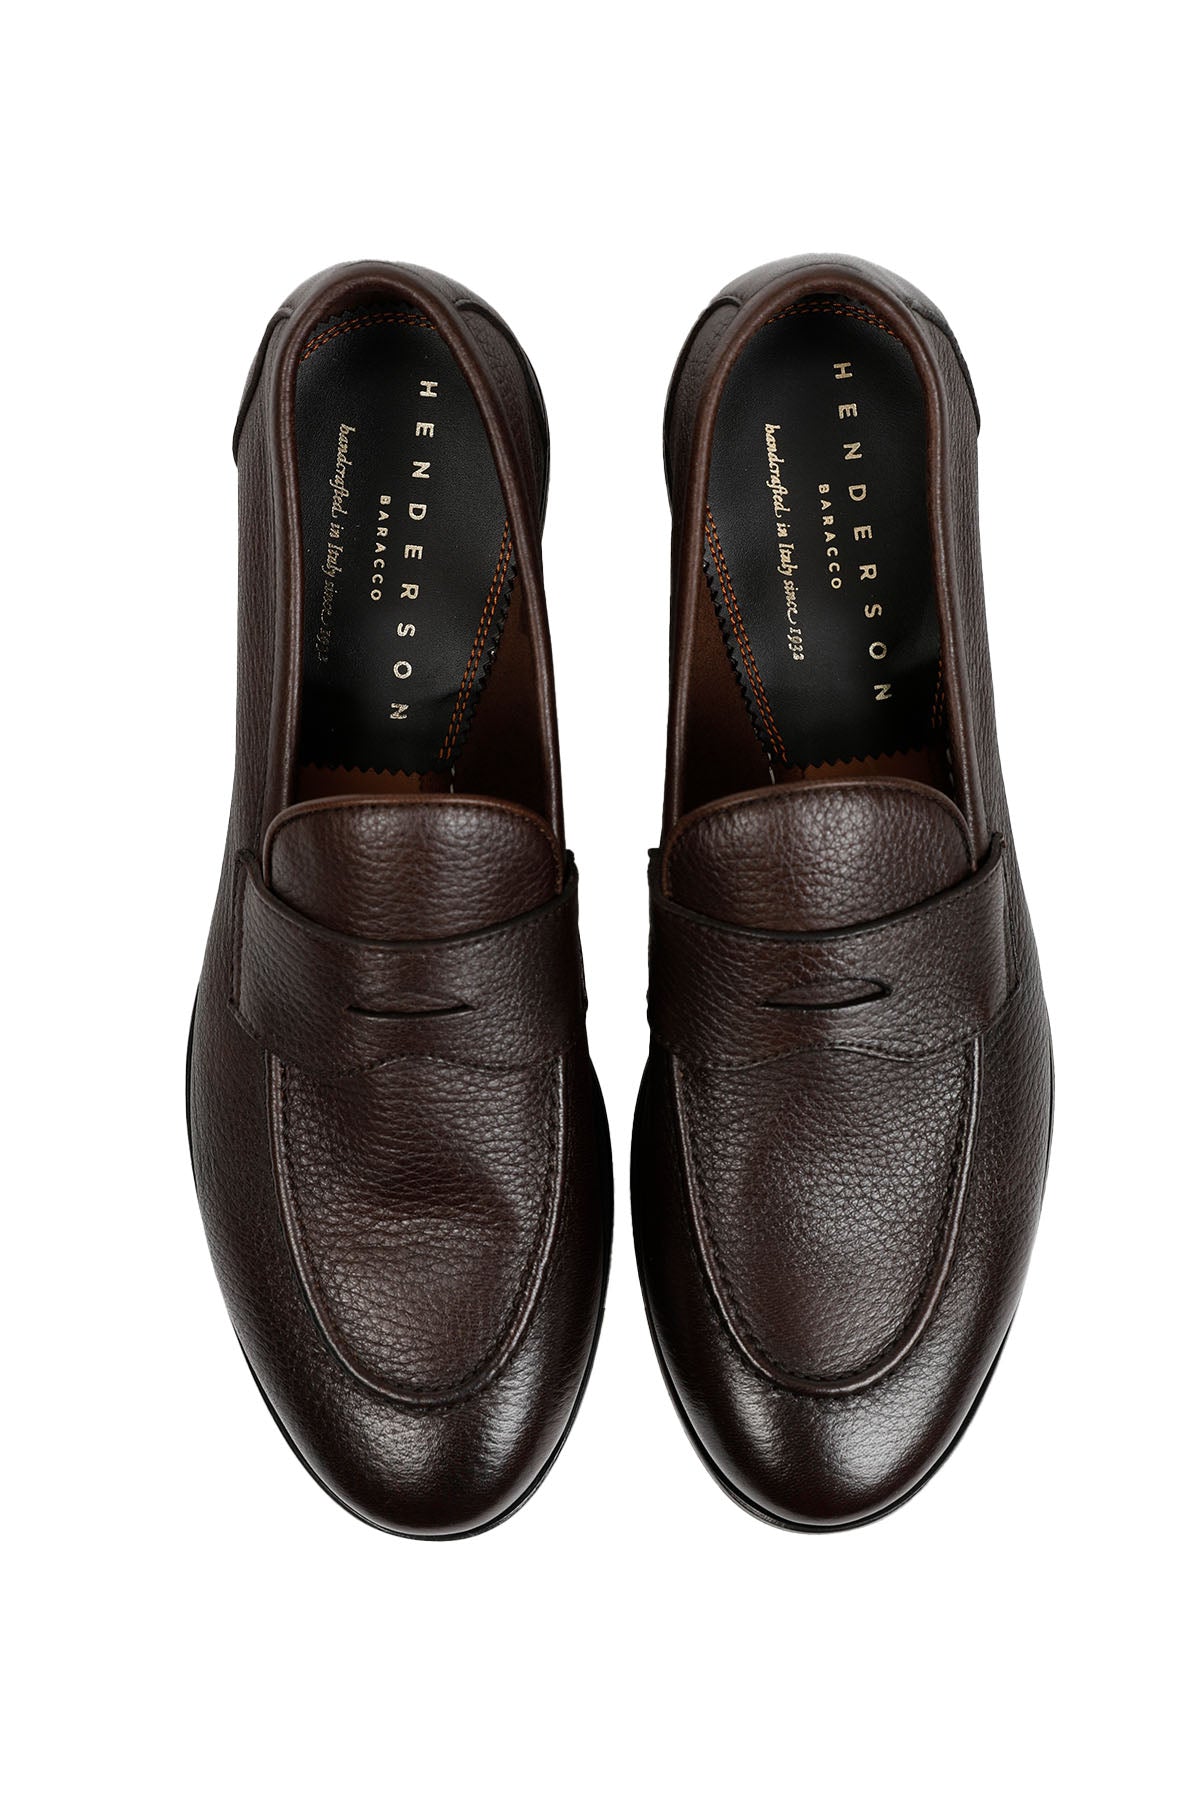 Henderson Kauçuk Tabanlı Loafer Ayakkabı-Libas Trendy Fashion Store